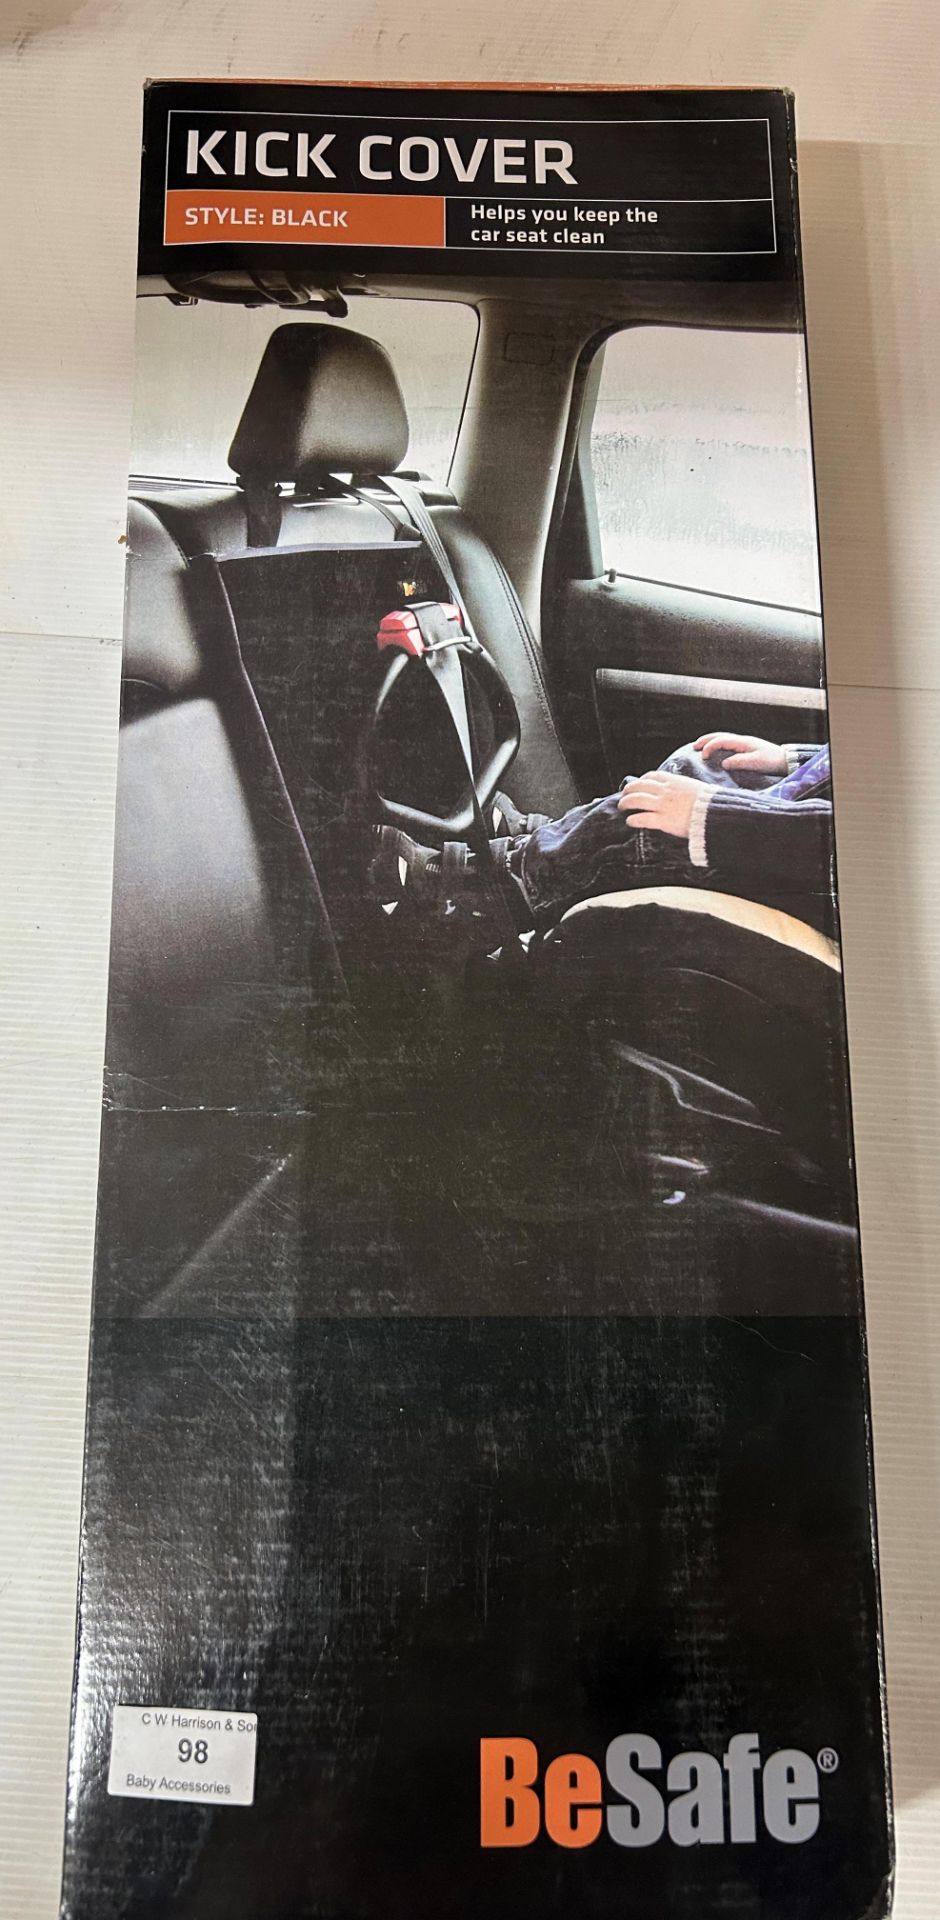 BE SAFE BLACK KICK COVER SEAT PROTECTOR RRP £35 BNIB (Saleroom location: F11) - Image 2 of 2